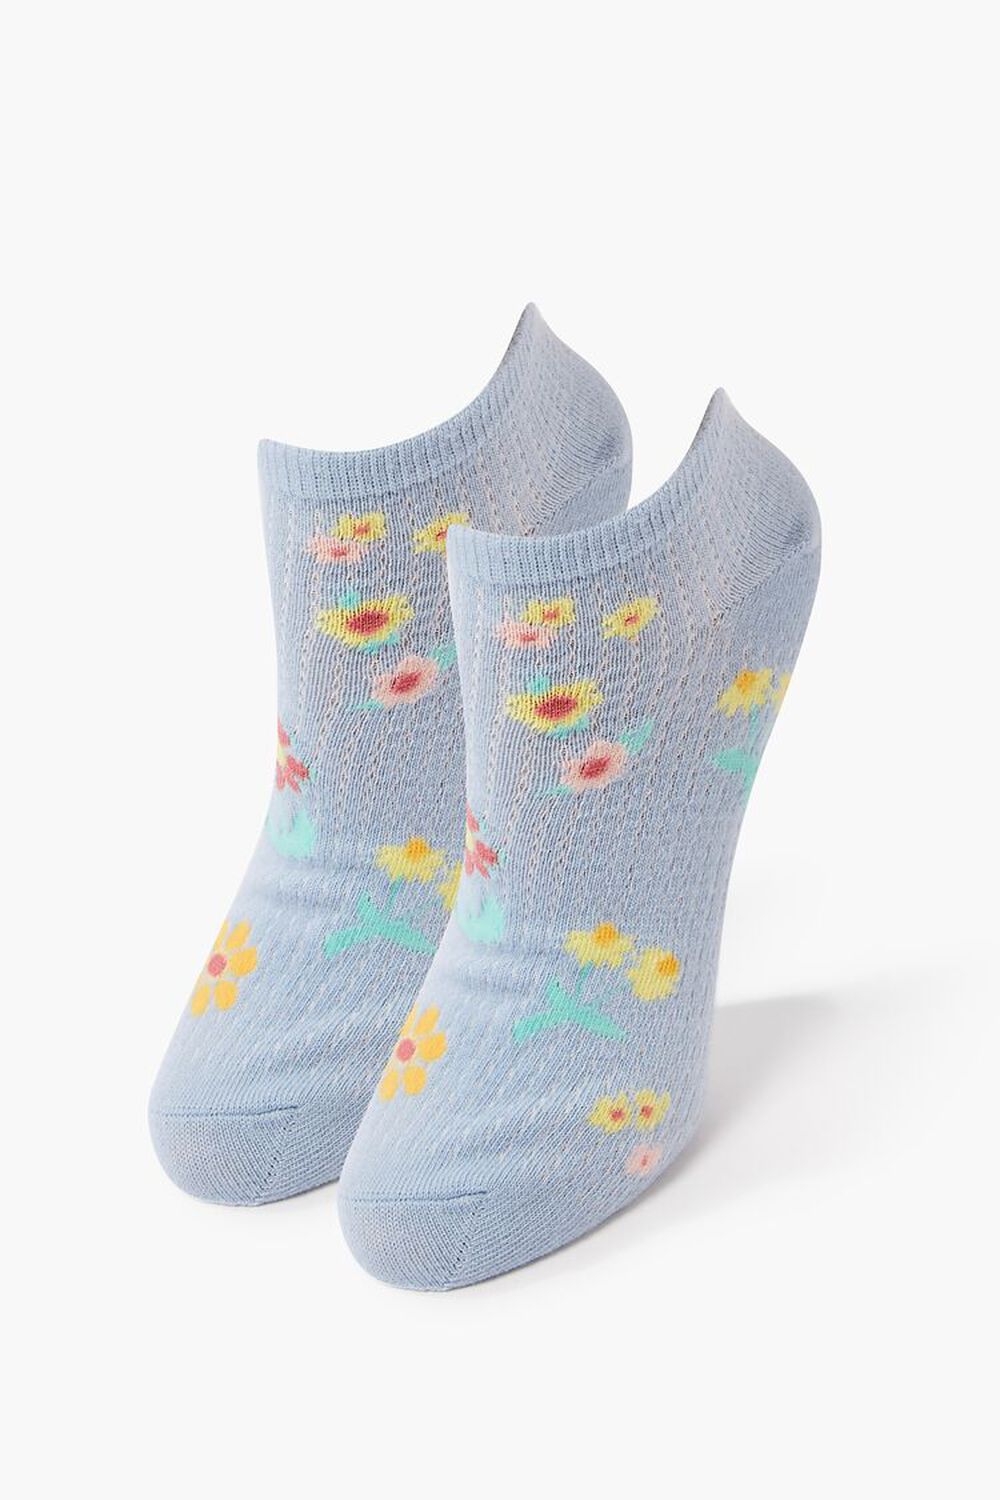 BLUE/MULTI Floral Print Ankle Socks, image 1